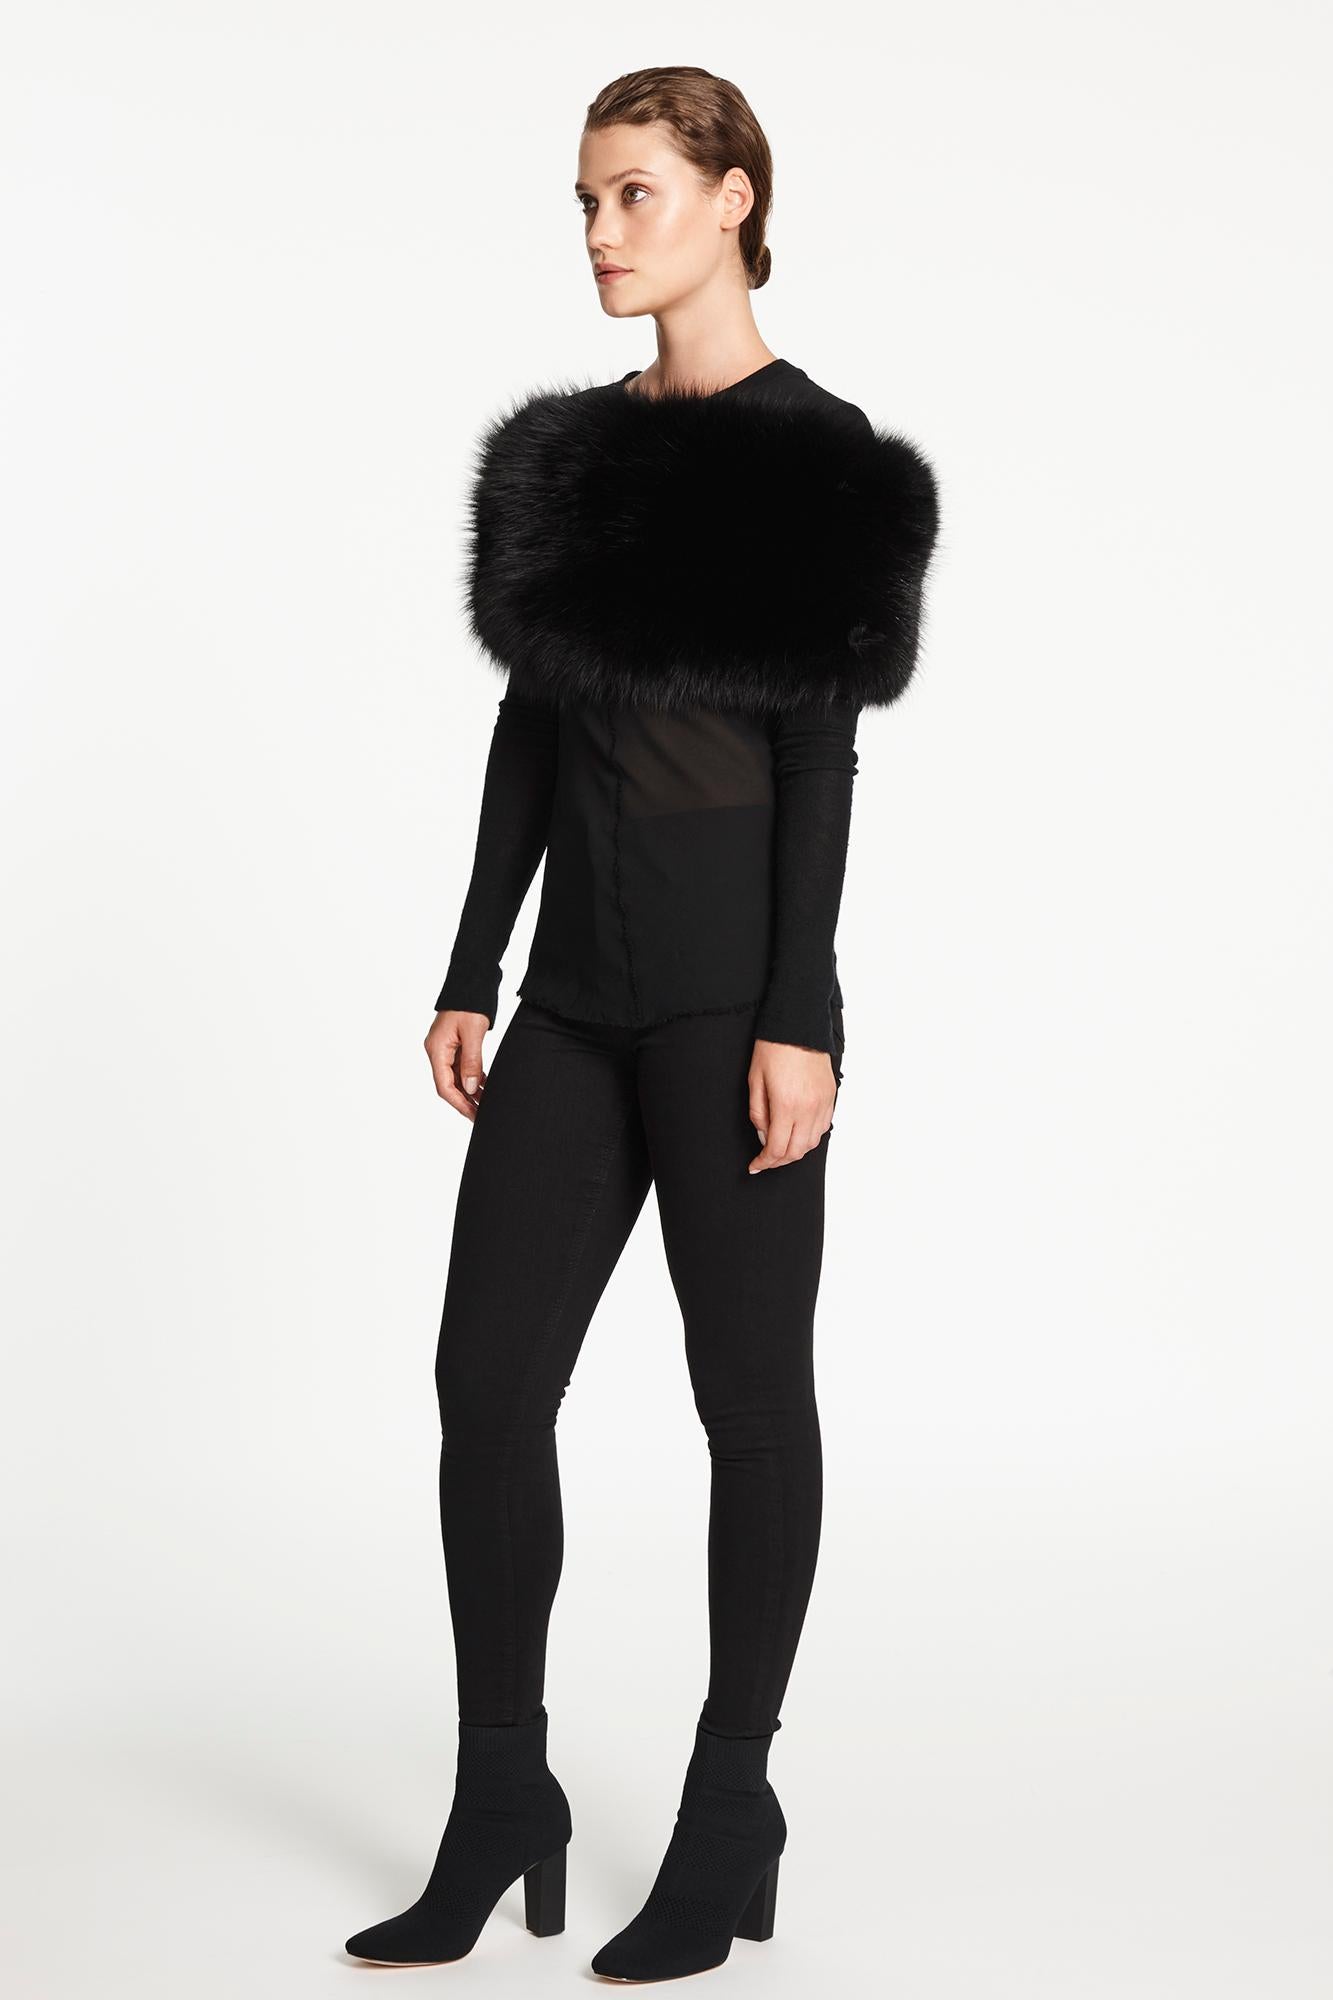 Verheyen London Chained Stole in Black Fox Fur & Chain - Brand New 4